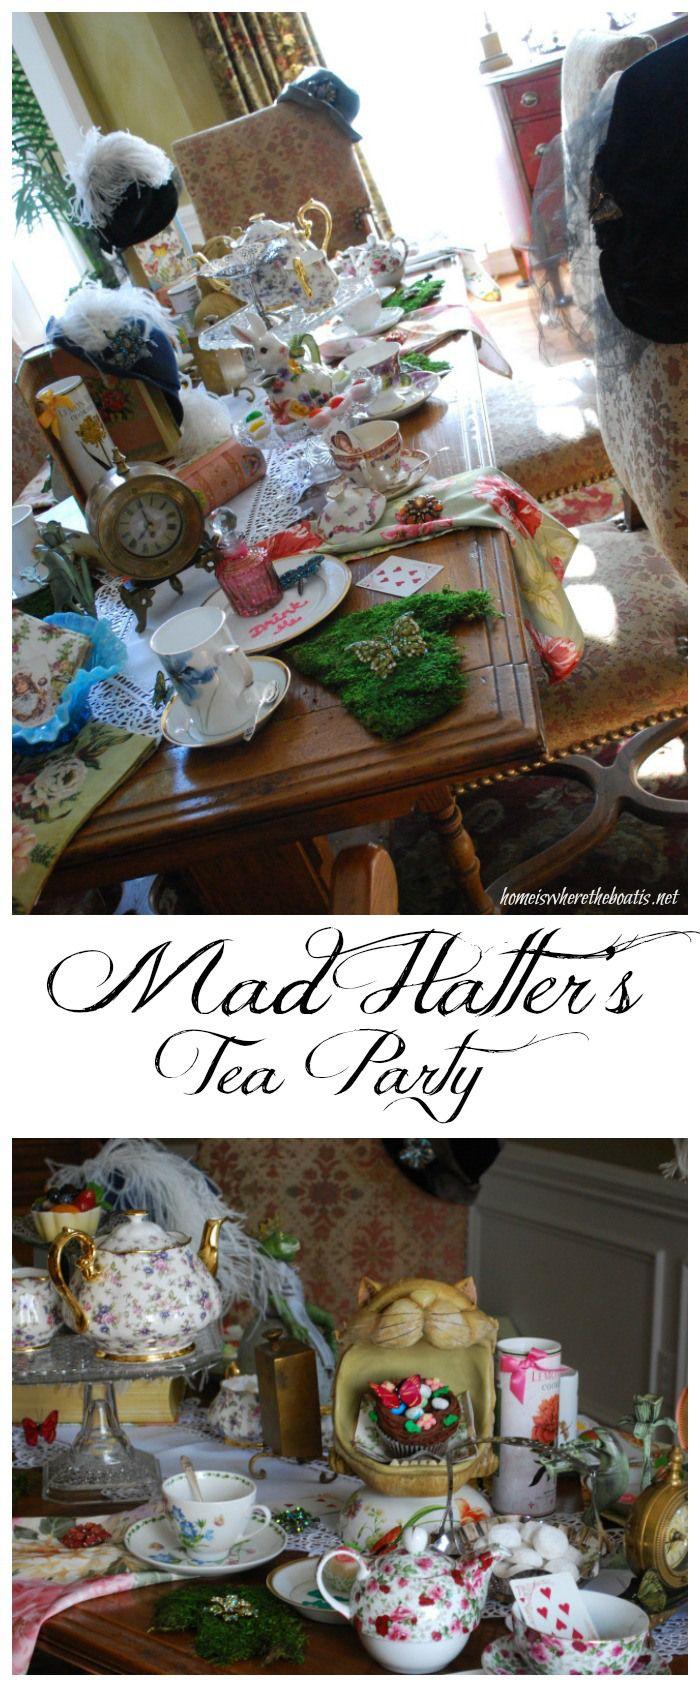 زفاف - Through The Looking Glass: A Mad Hatter's Tea Party